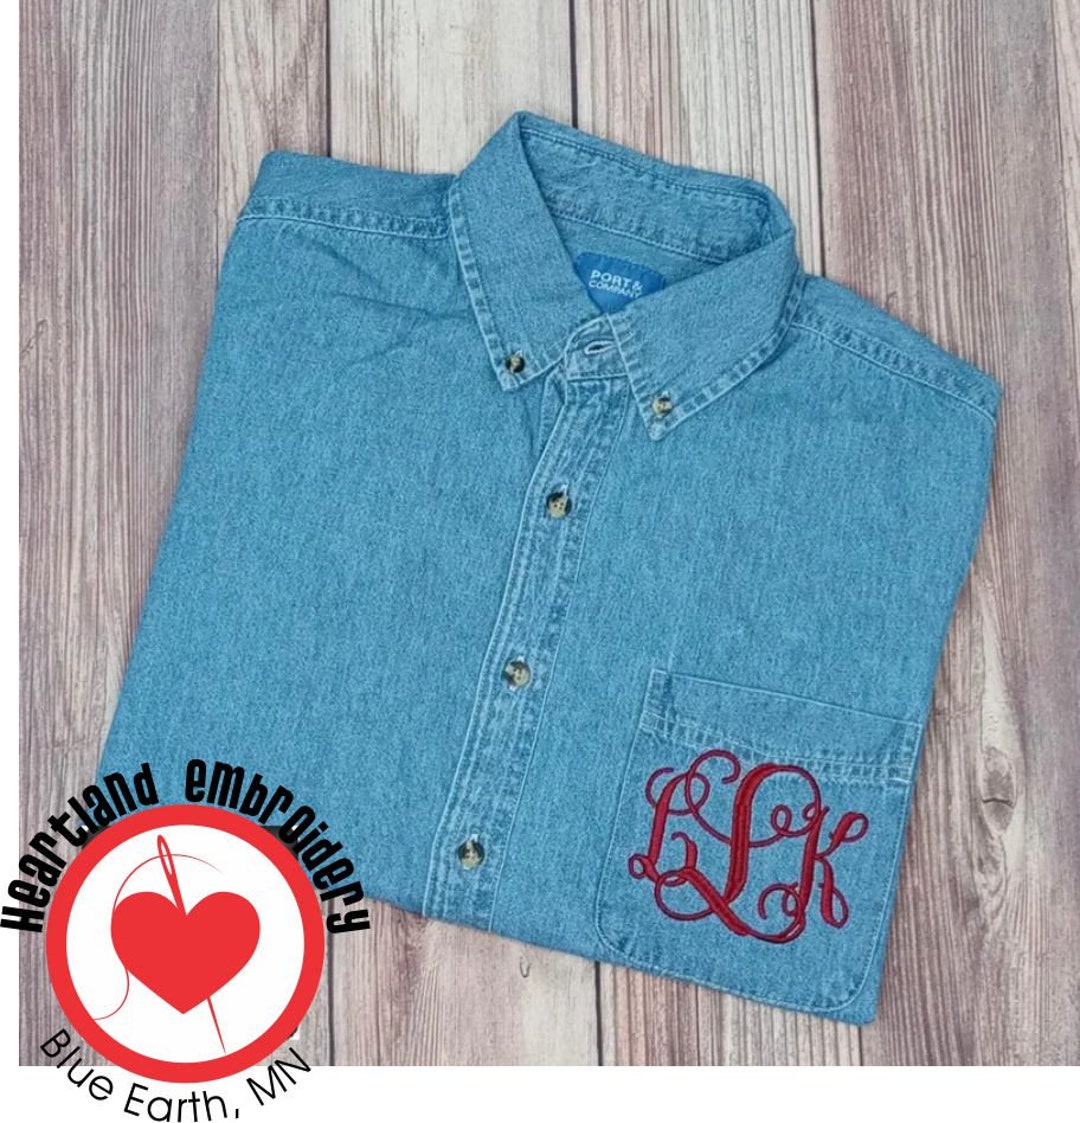 Markeza Monogrammed Denim Shirt / Denim Button Down Shirt with Embroidered Name or Monogram